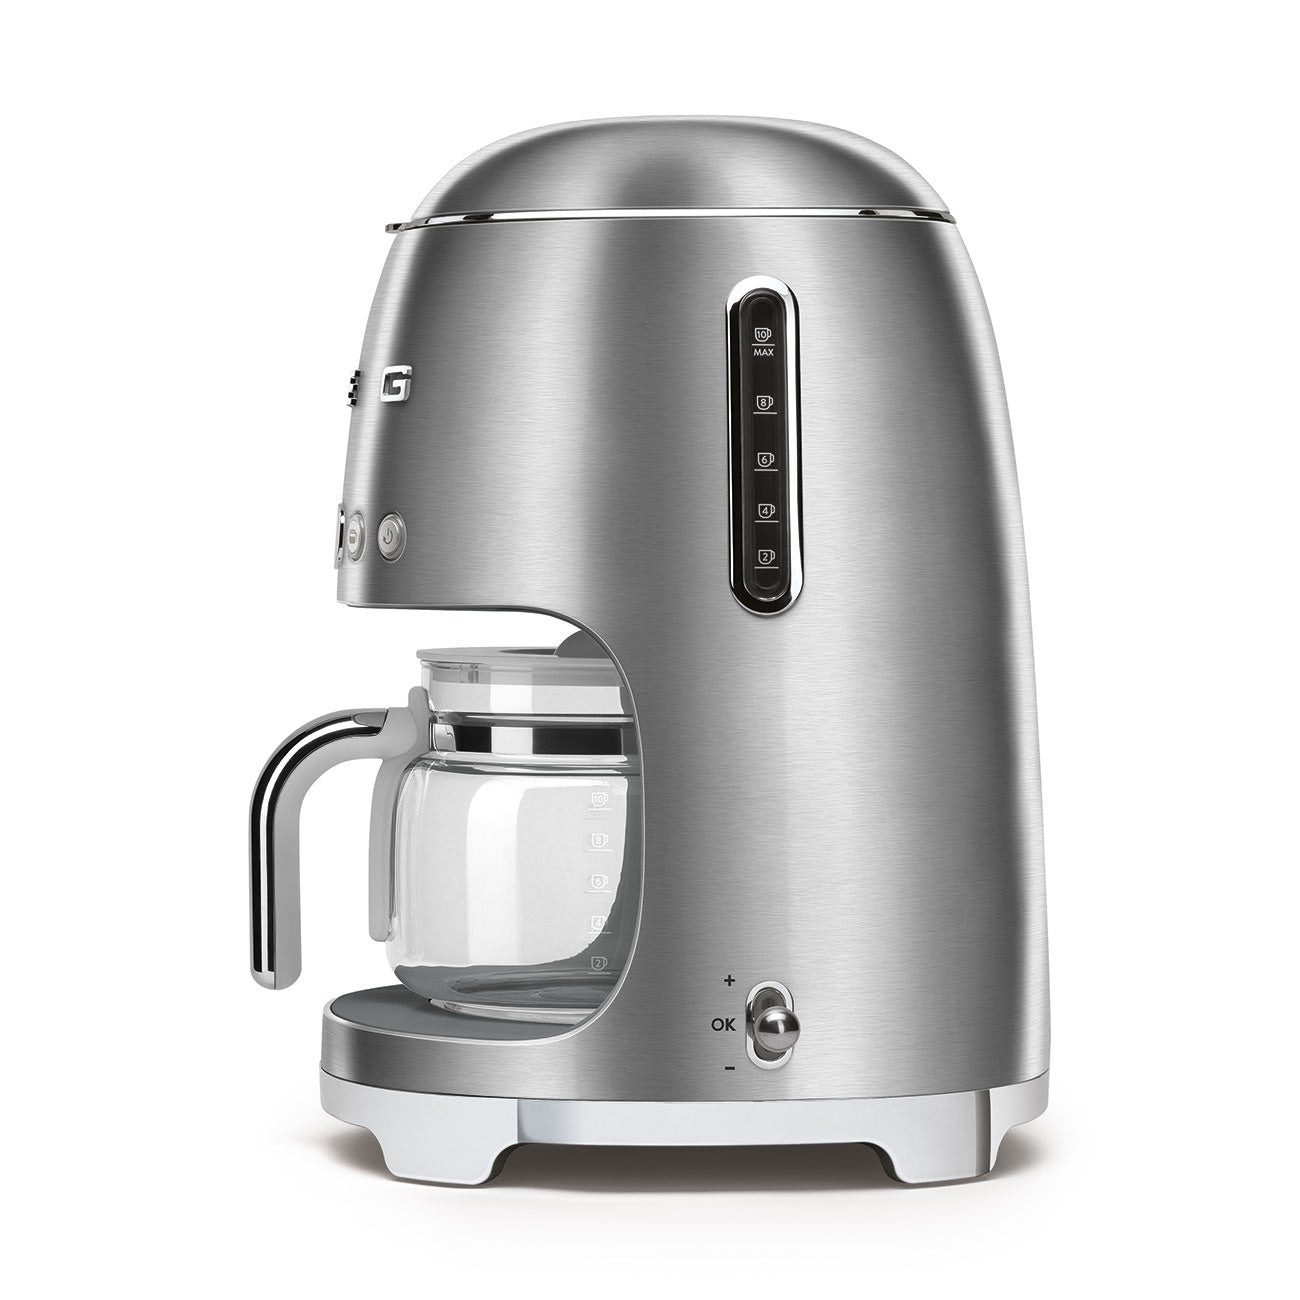 Smeg Drip Filter Coffee Machine - Stainless Steel - Premium Coffee Machines from Smeg - Just $194.99! Shop now at W Hurst & Son (IW) Ltd